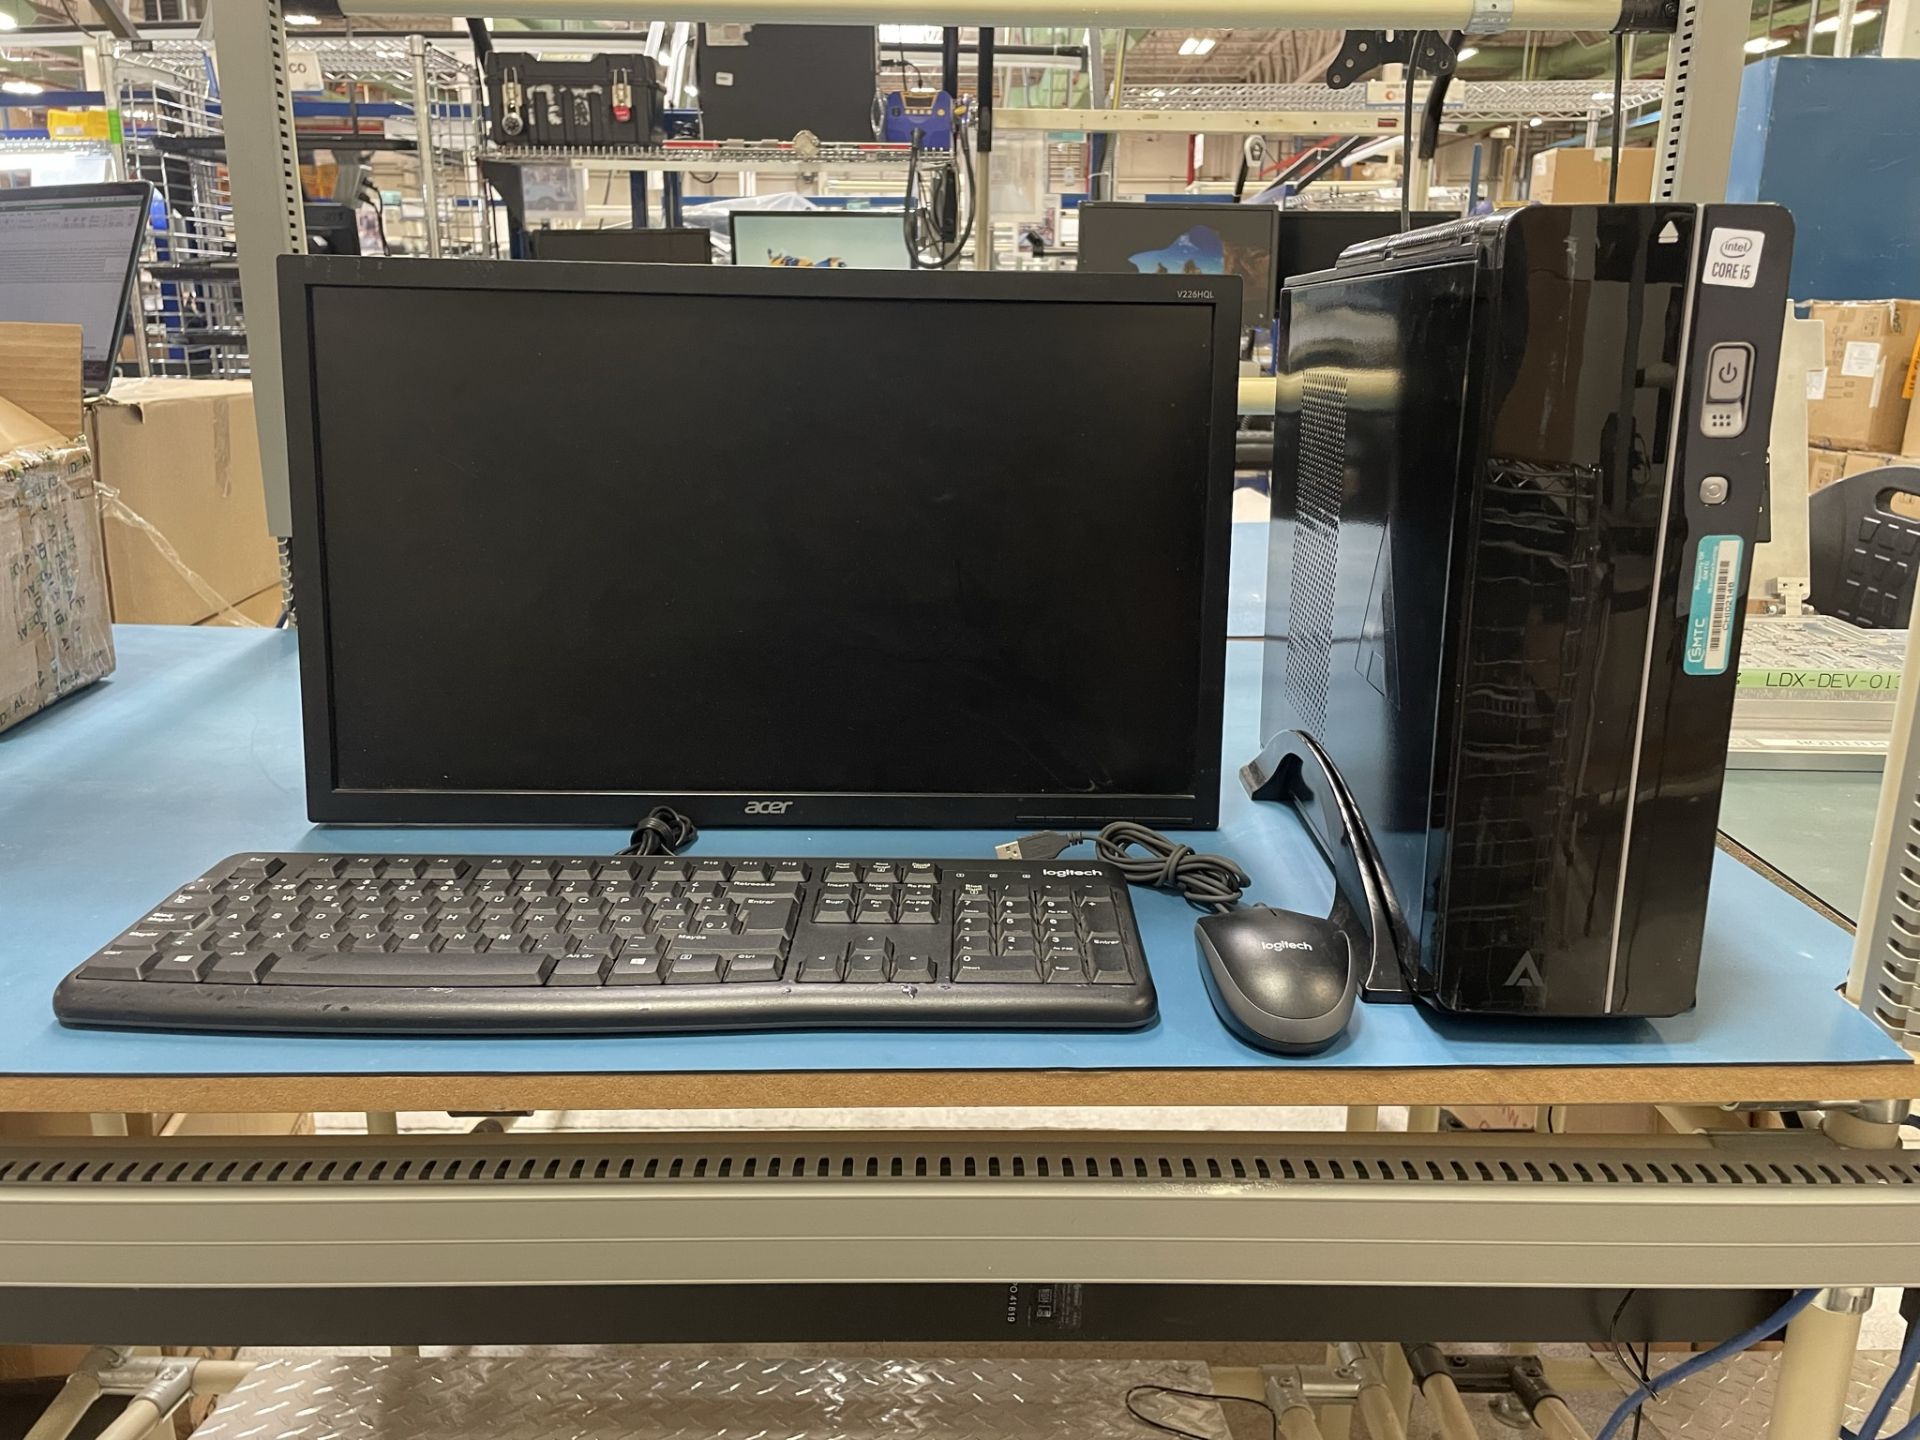 (New Equipment) Lot of 4 desktop computers containing: 1 Acer Computer, Model V226HQL, Serial No. S